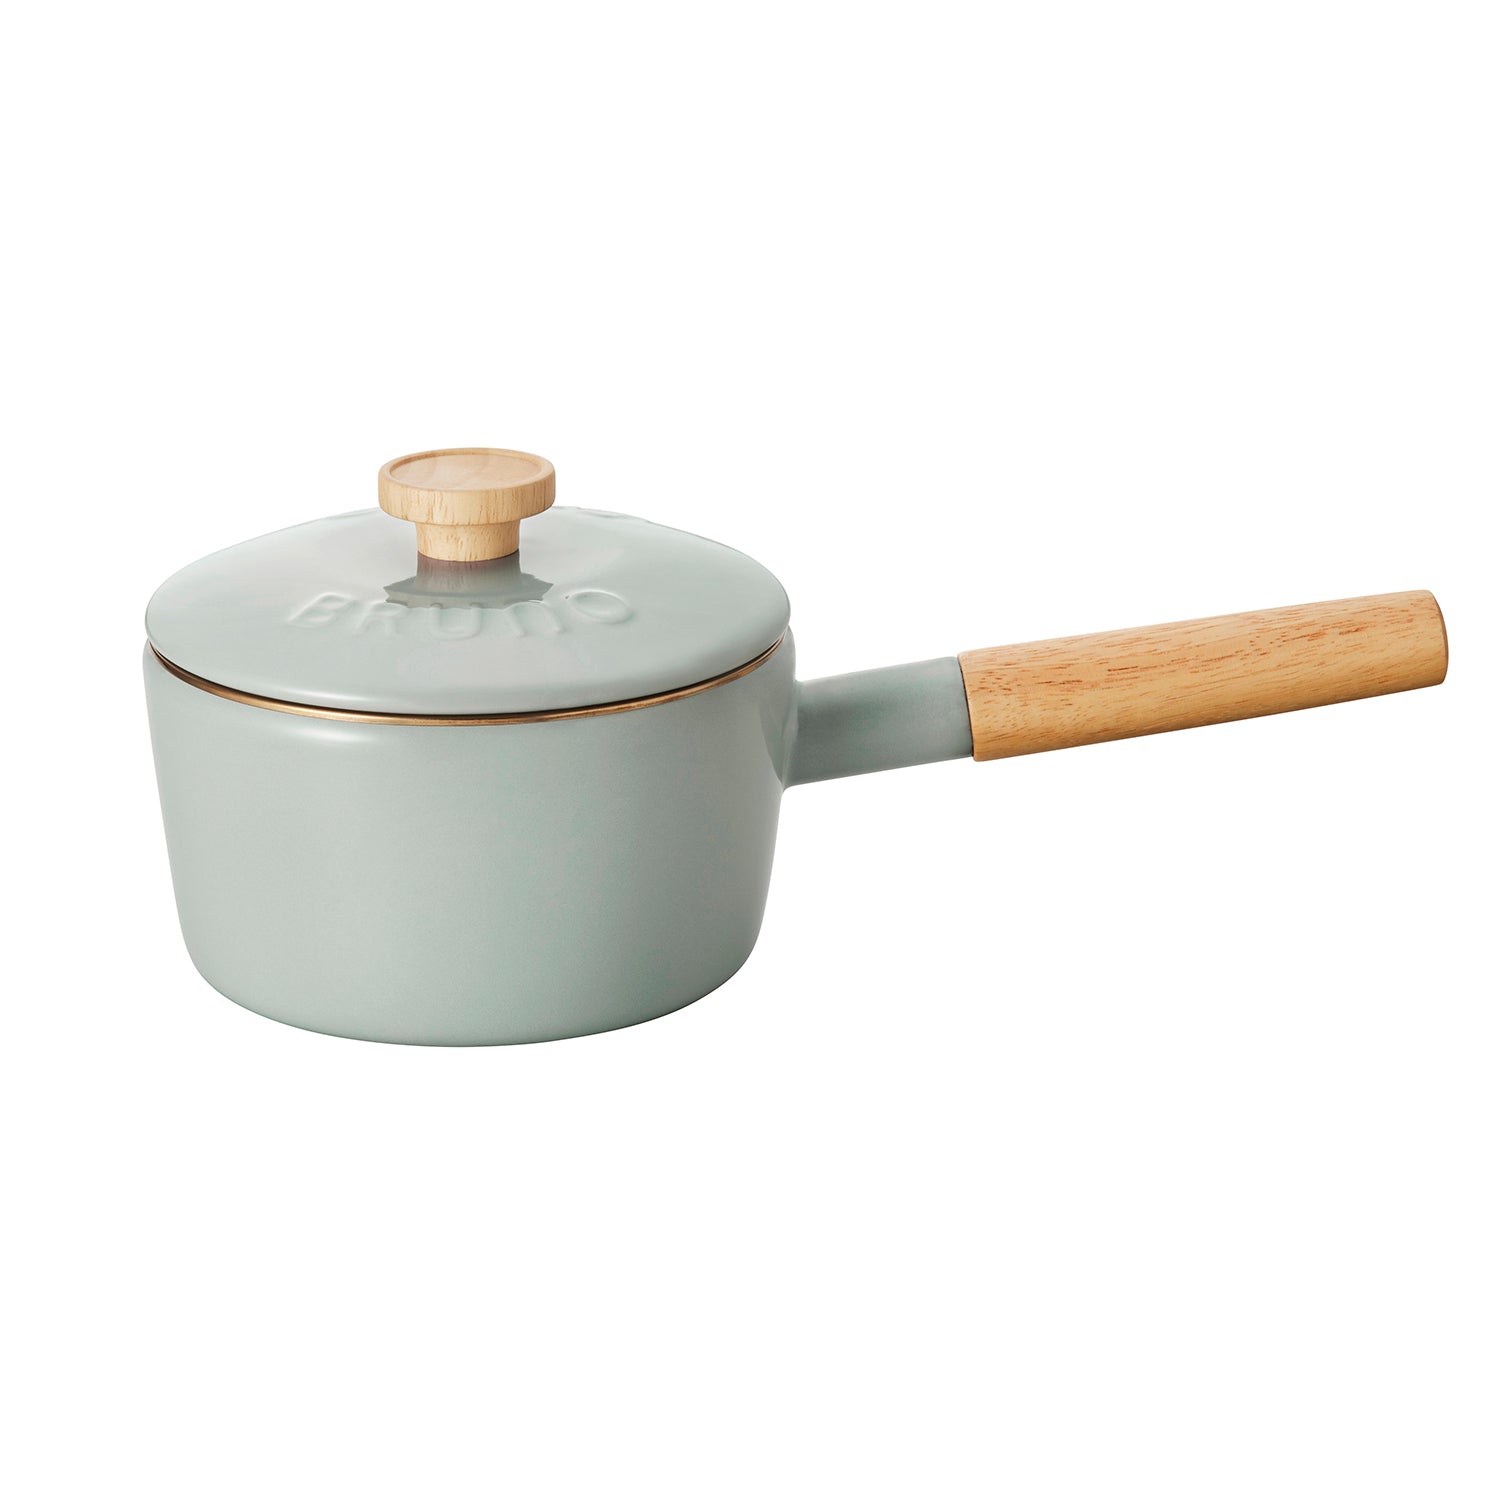 BRUNO 16cm 琺瑯單柄鍋 - 藍綠色